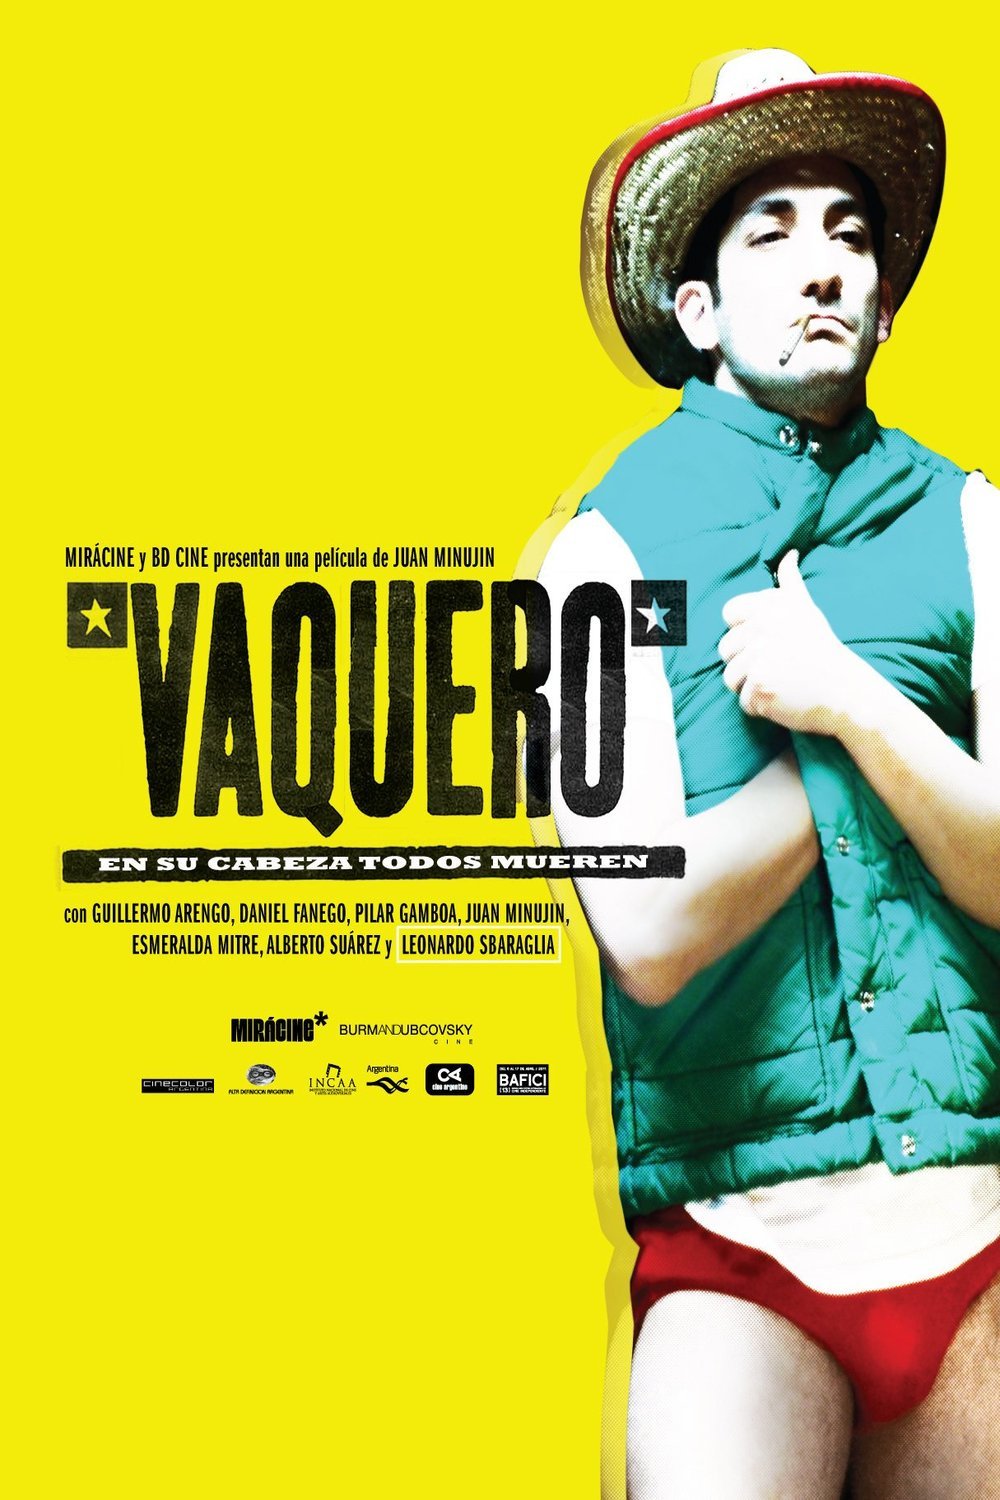 Spanish poster of the movie Vaquero